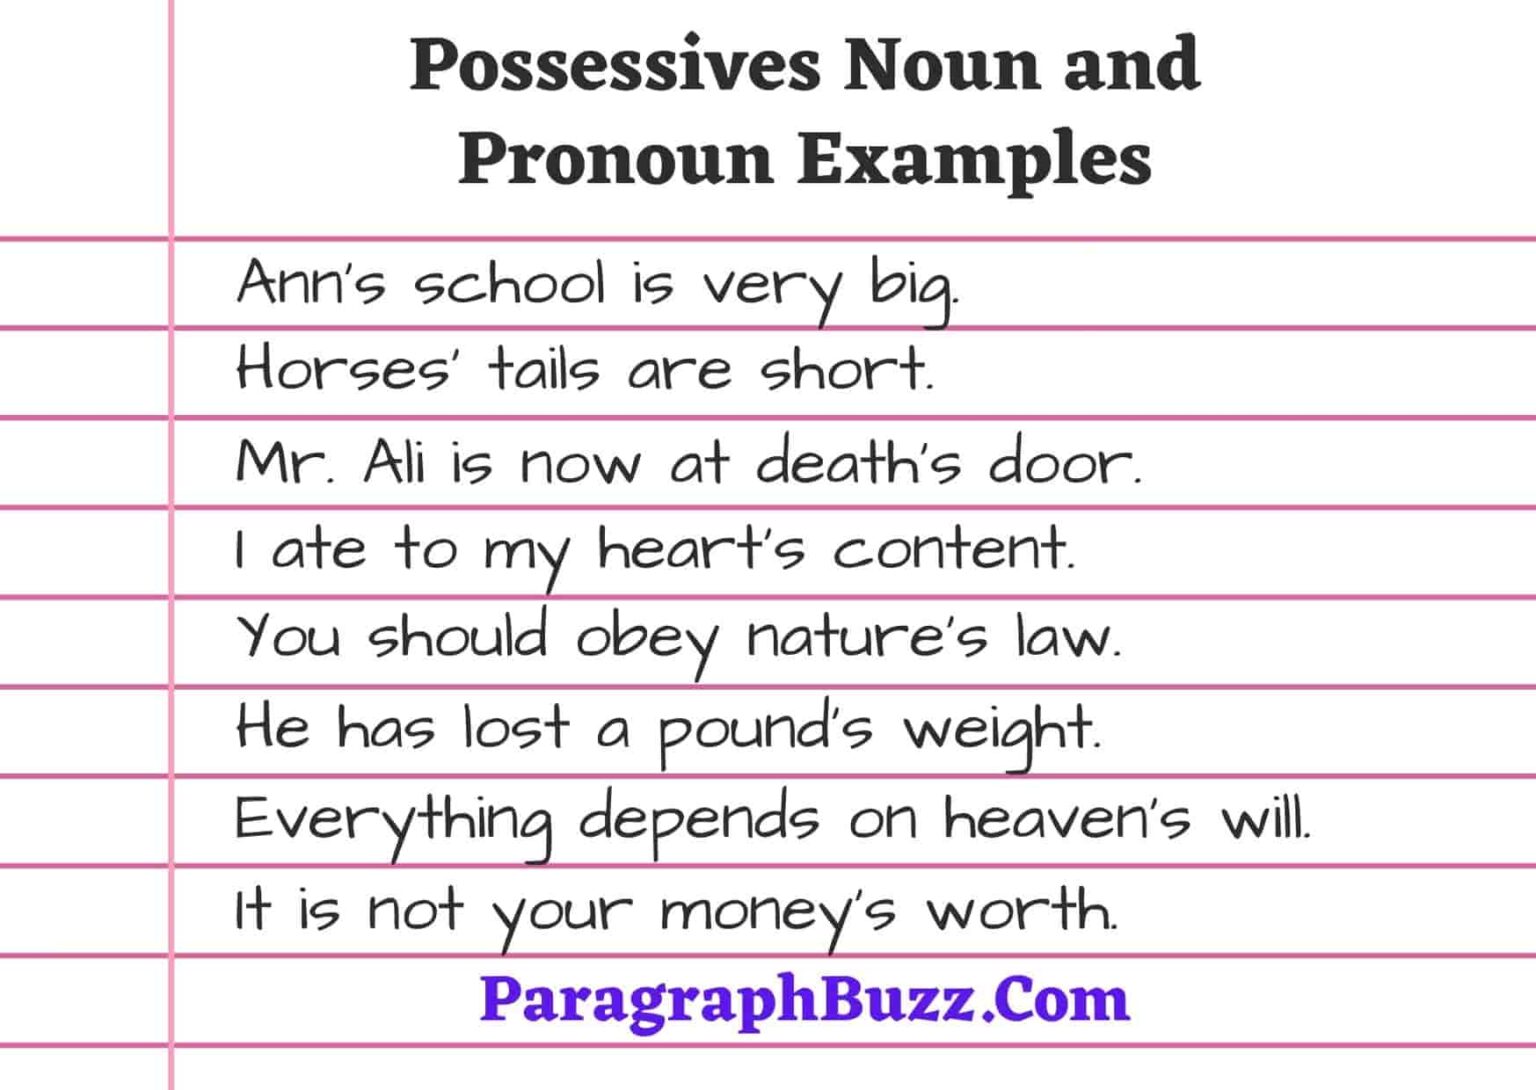 Noun pronoun. But for Noun/pronoun примеры. Noun pronoun example. Sentences for possessive pronouns. Short noun